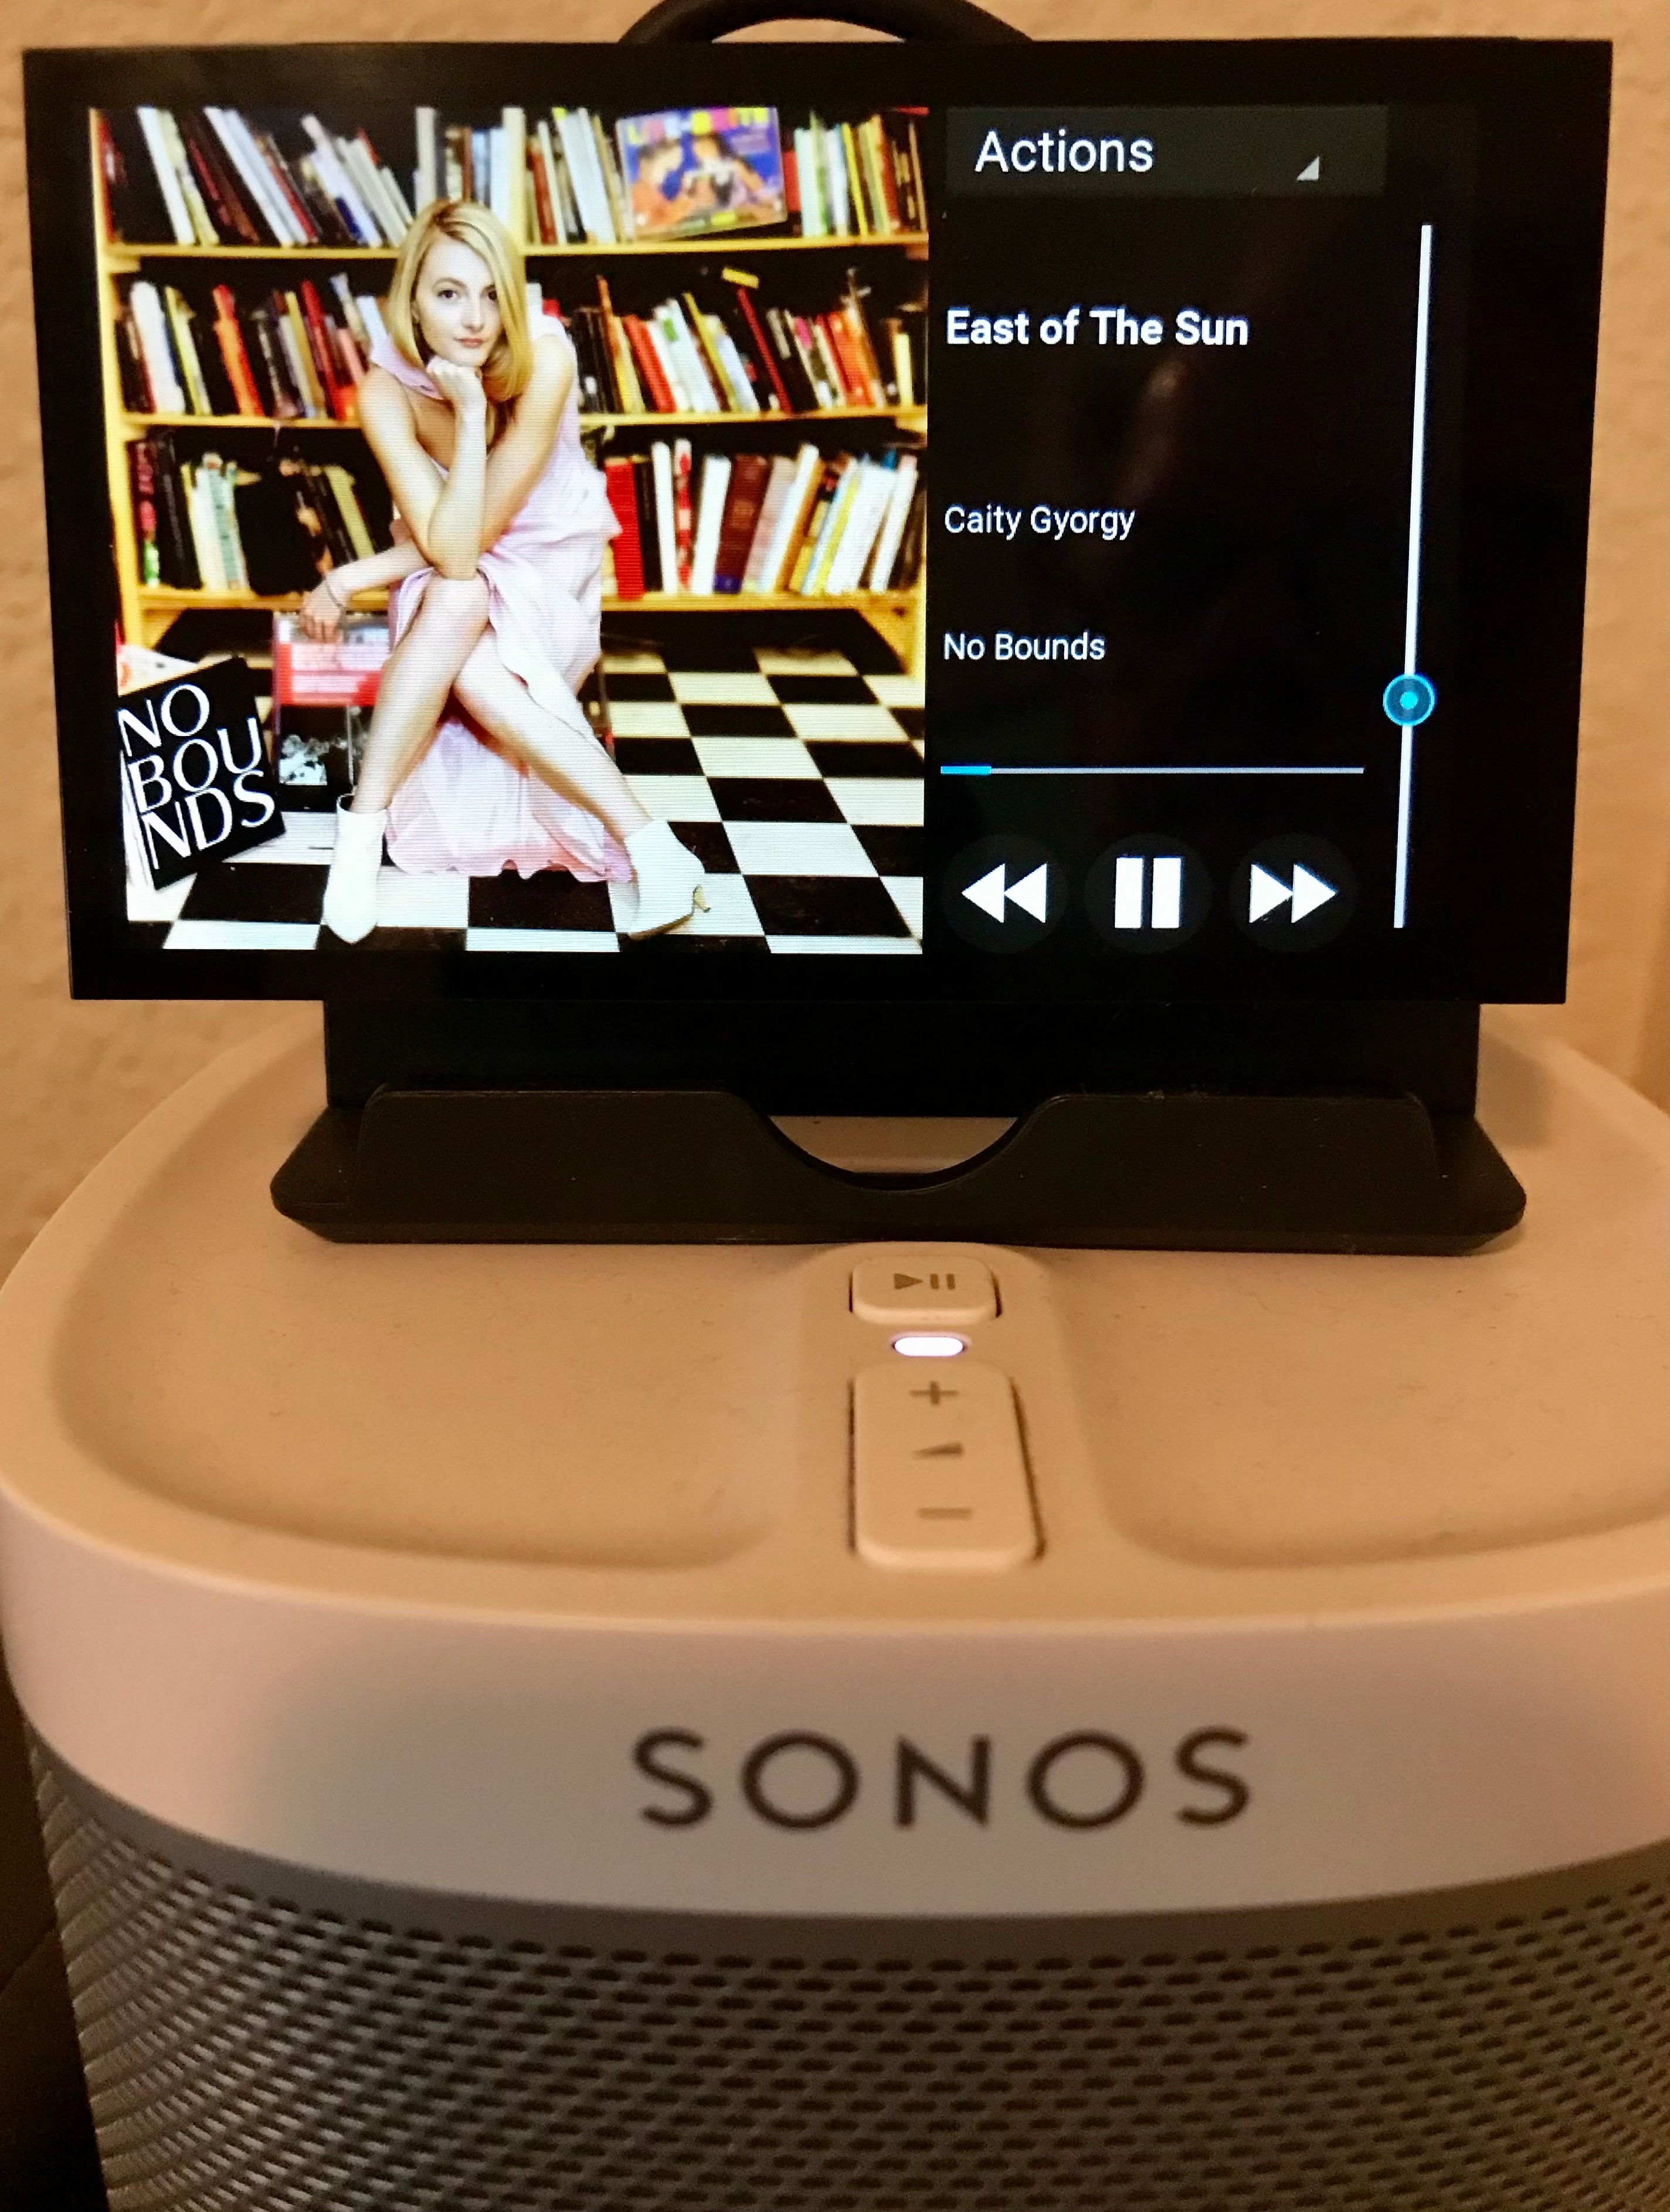 Referendum Bekritiseren Bij Sonos Touchscreen Controller | Sonos Community